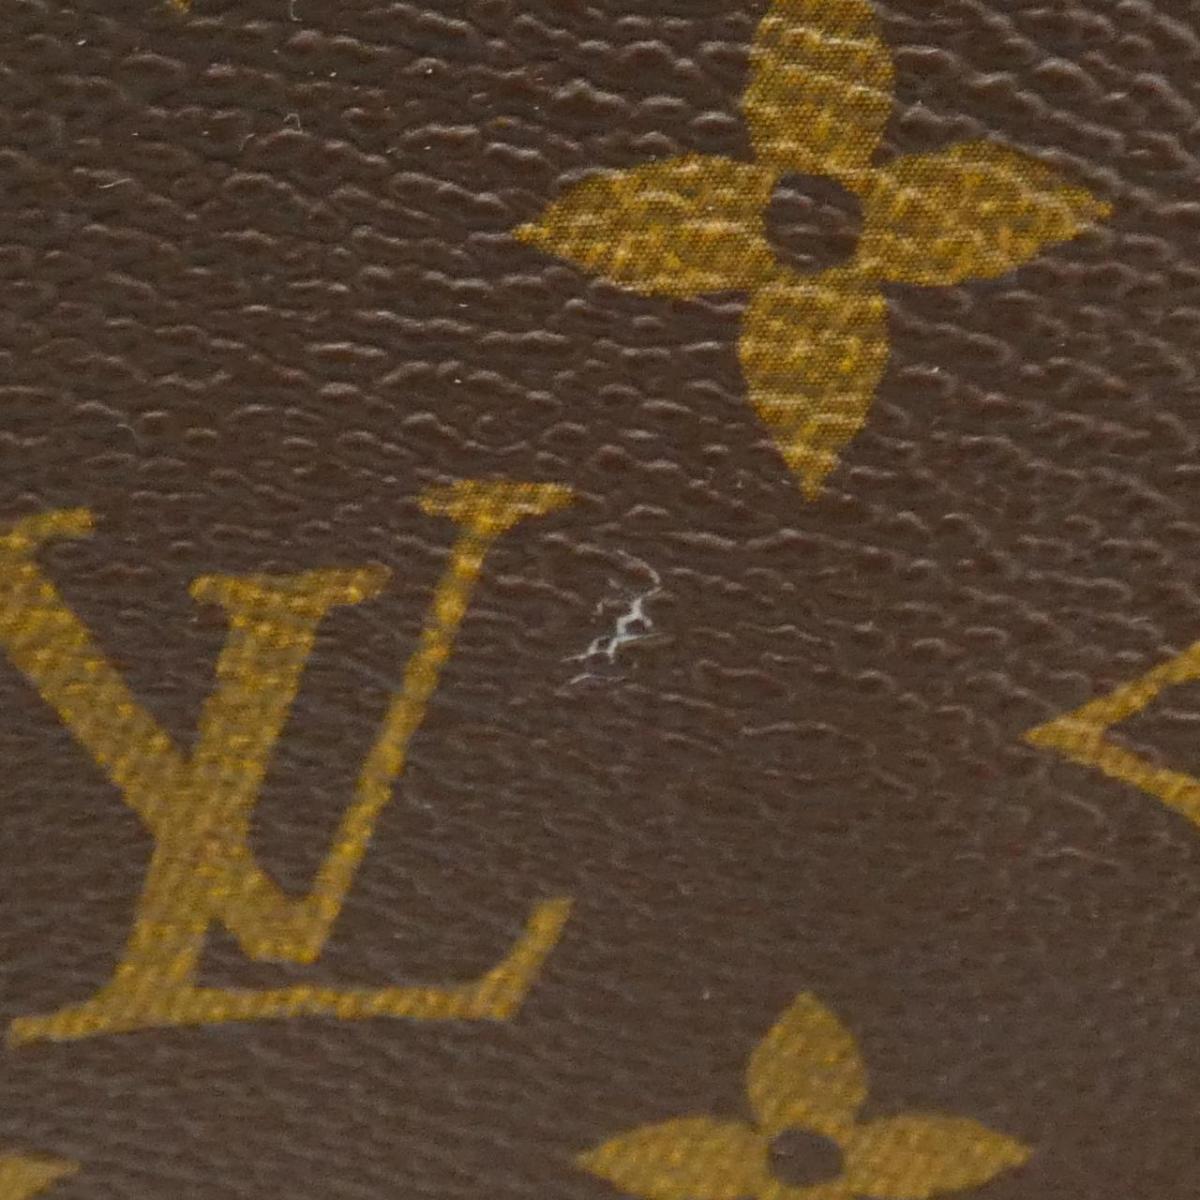 Louis Vuitton Monogram Speedy 40 M41522 Bag